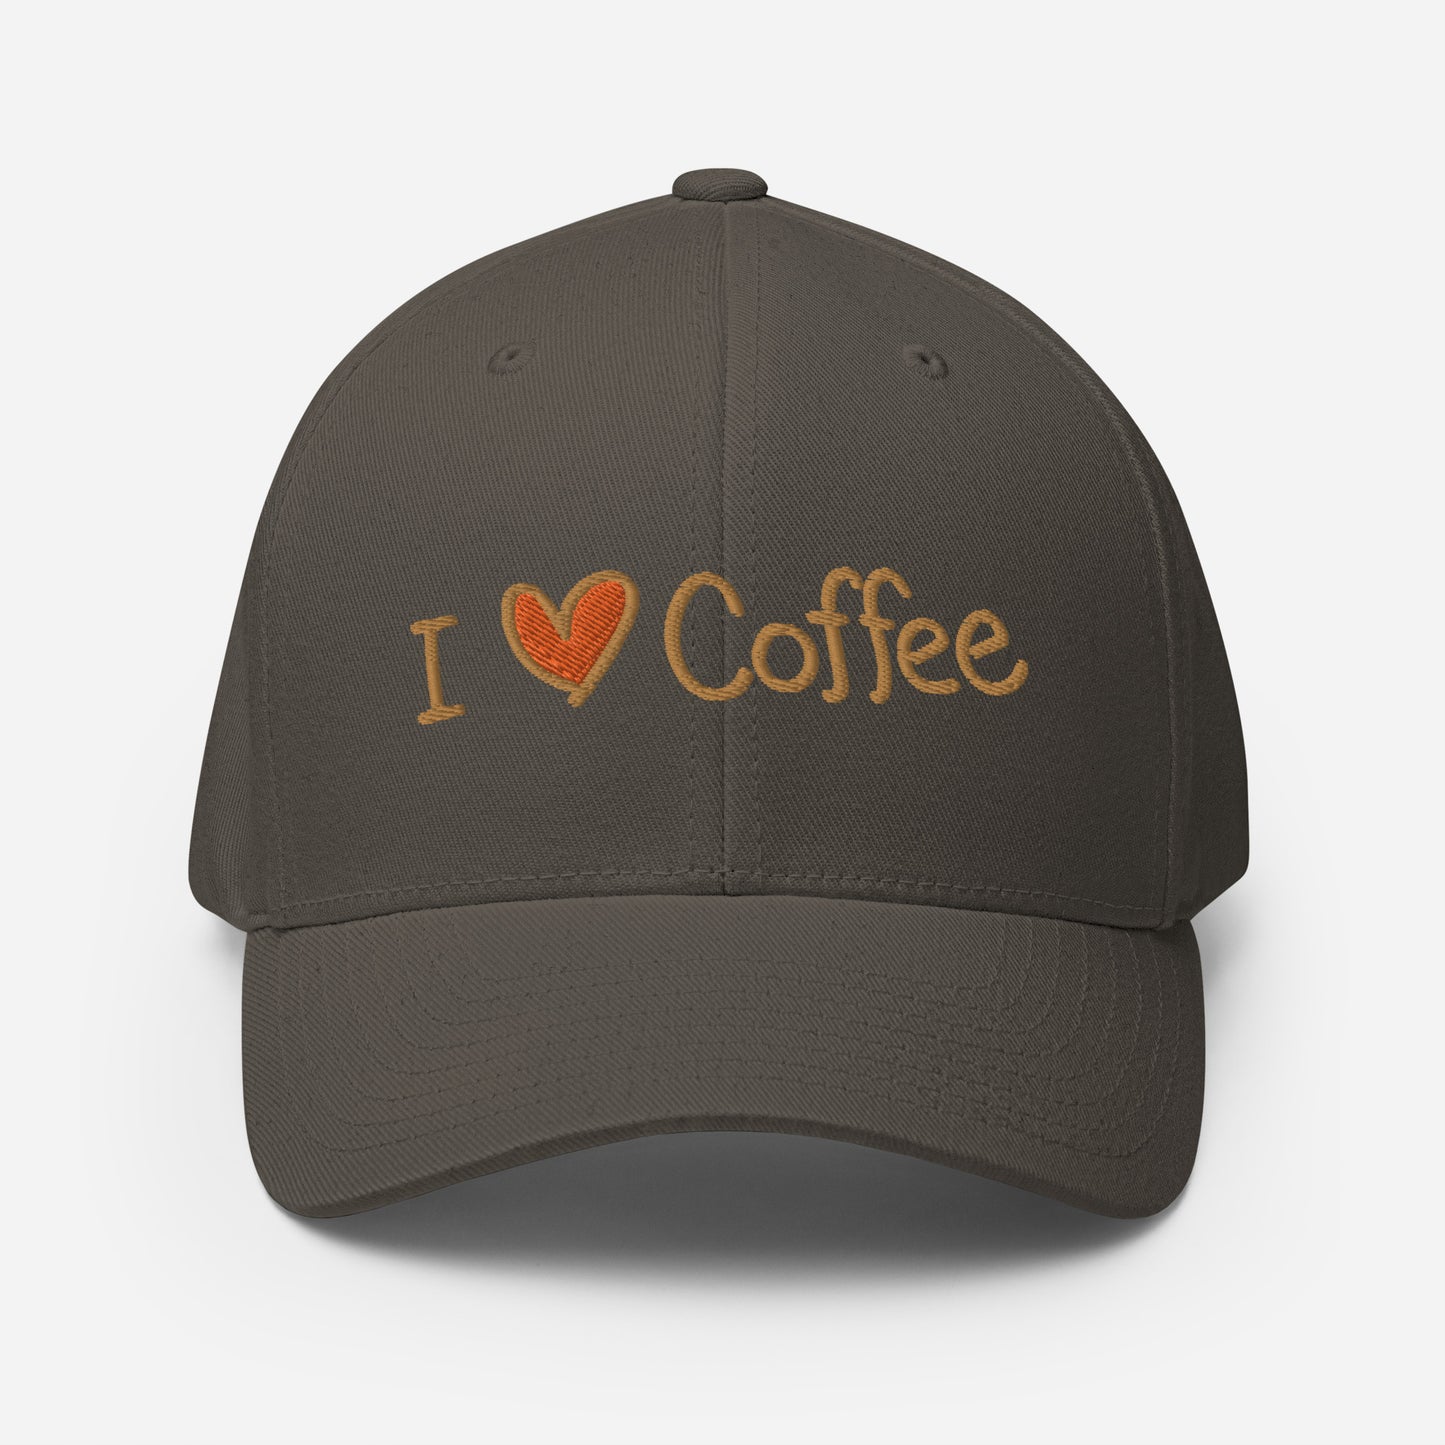 I LOVE Coffee - Structured Twill Cap